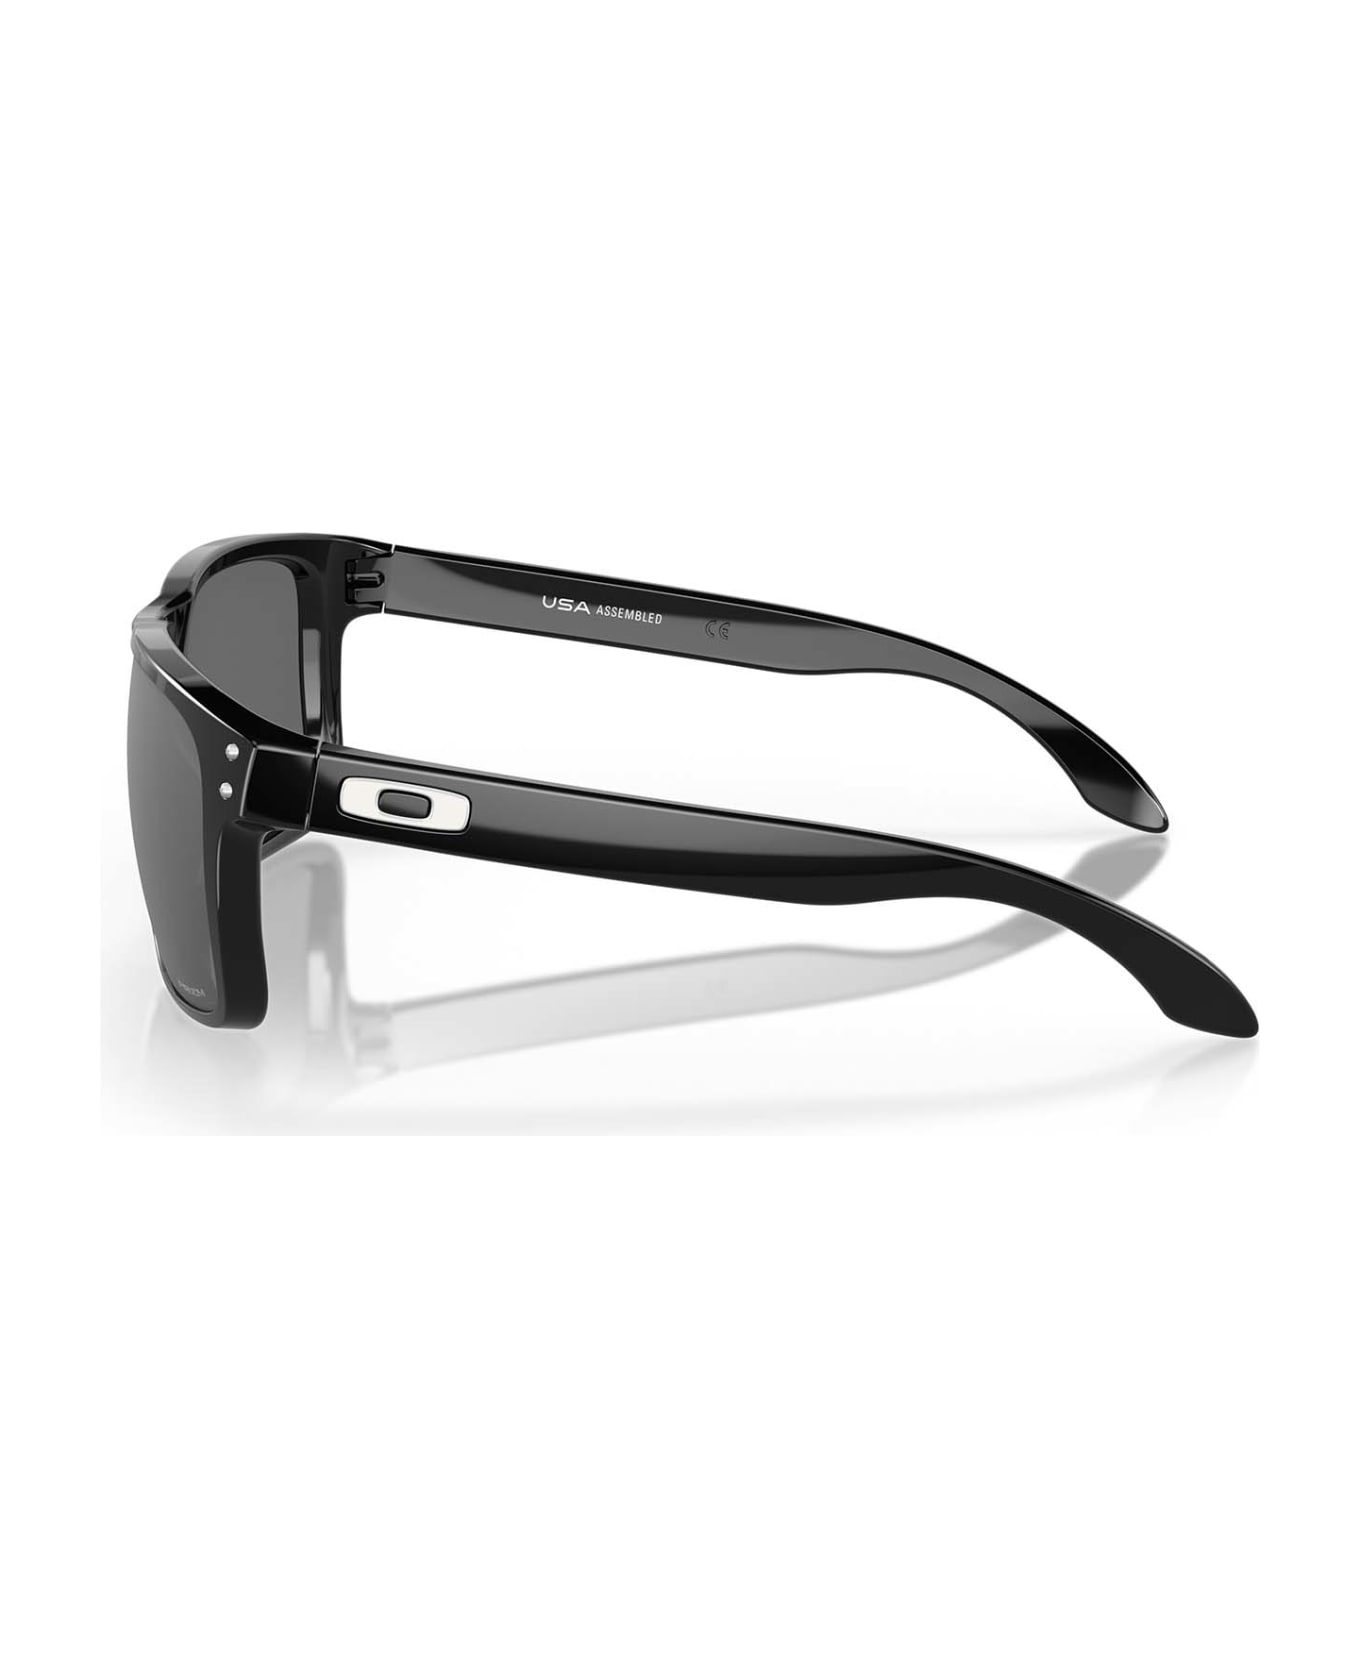 Oakley Oo9417 Polished Black Sunglasses - Polished Black